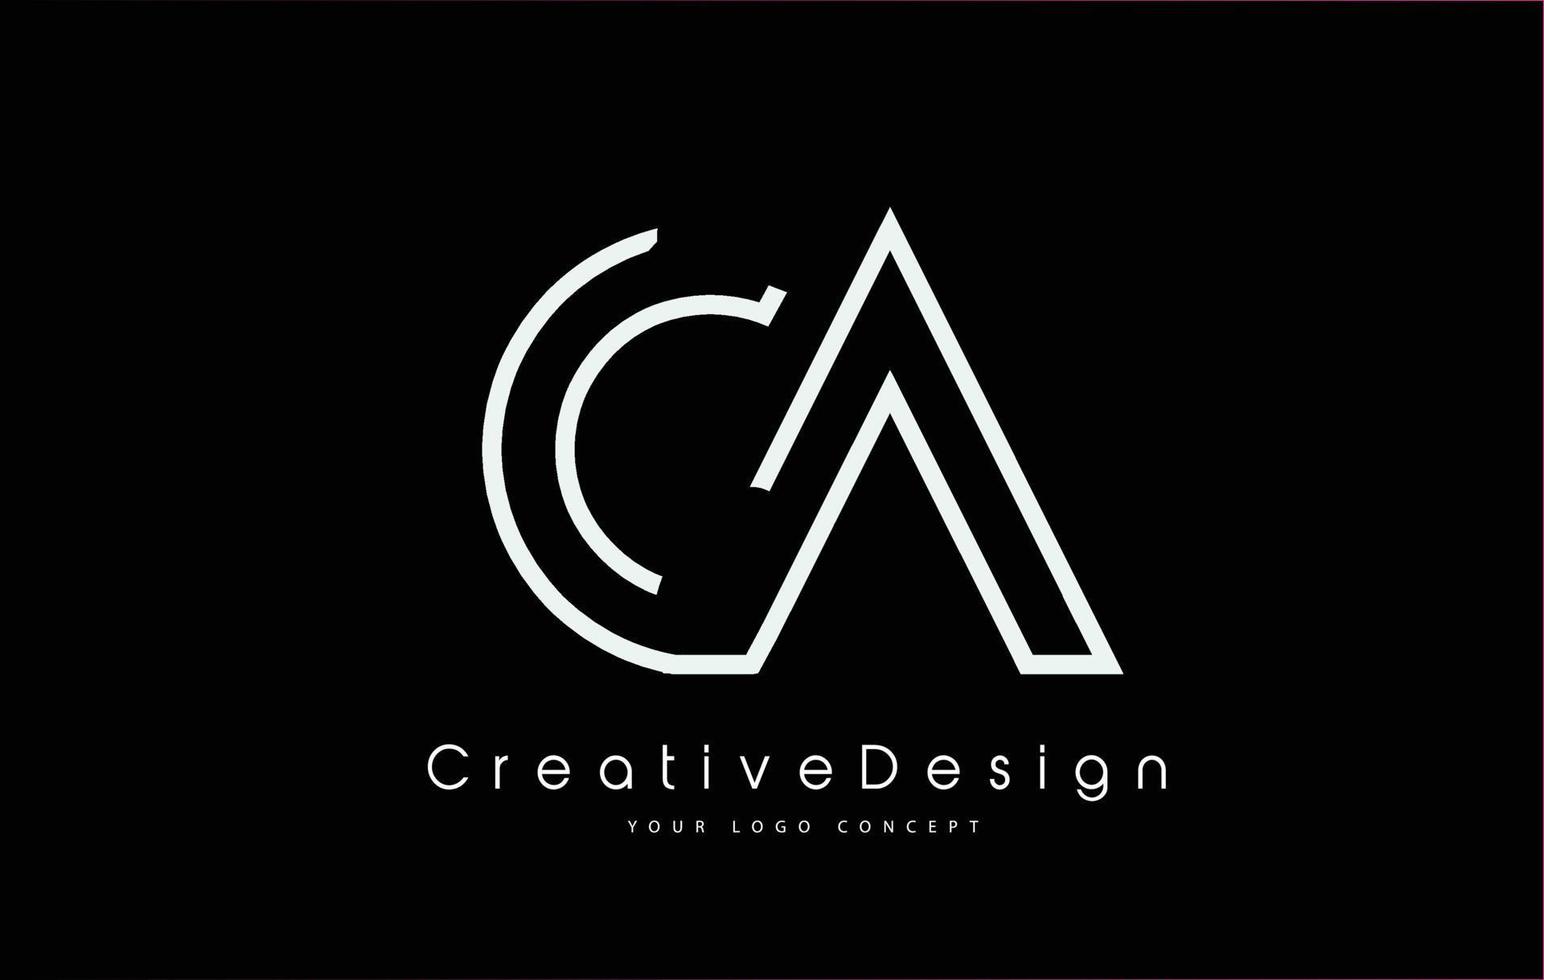 CA Letter Logo Design in White Colors. vector